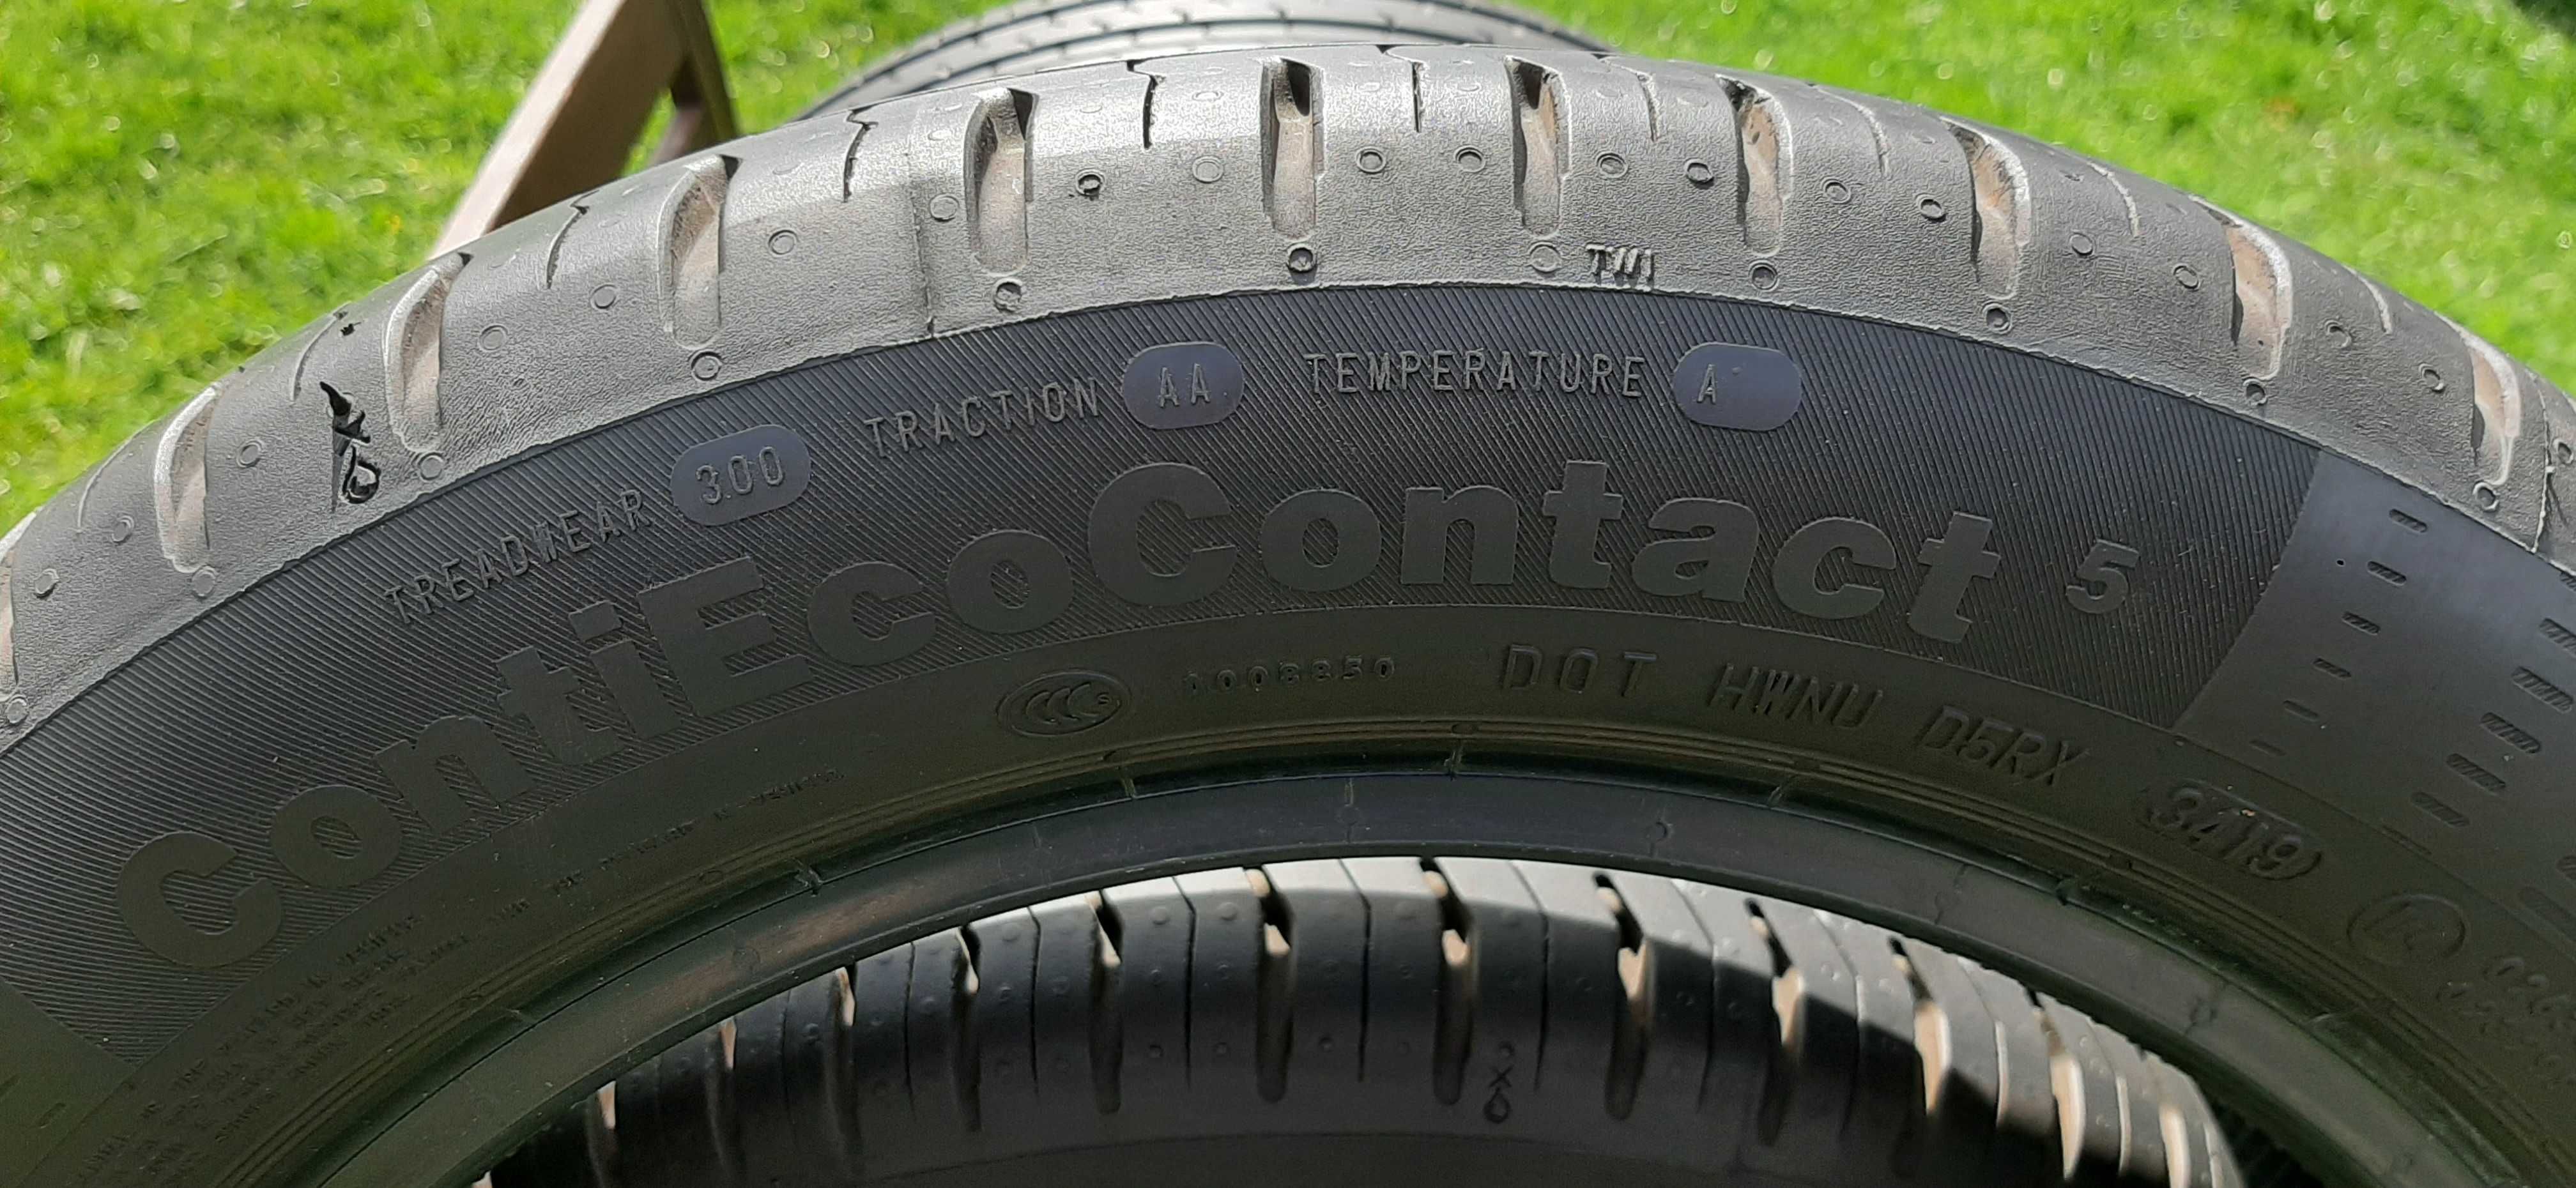 165/60R15 opony letnie 15" Continental ContiEcoContact5, 4szt 8mm 2019